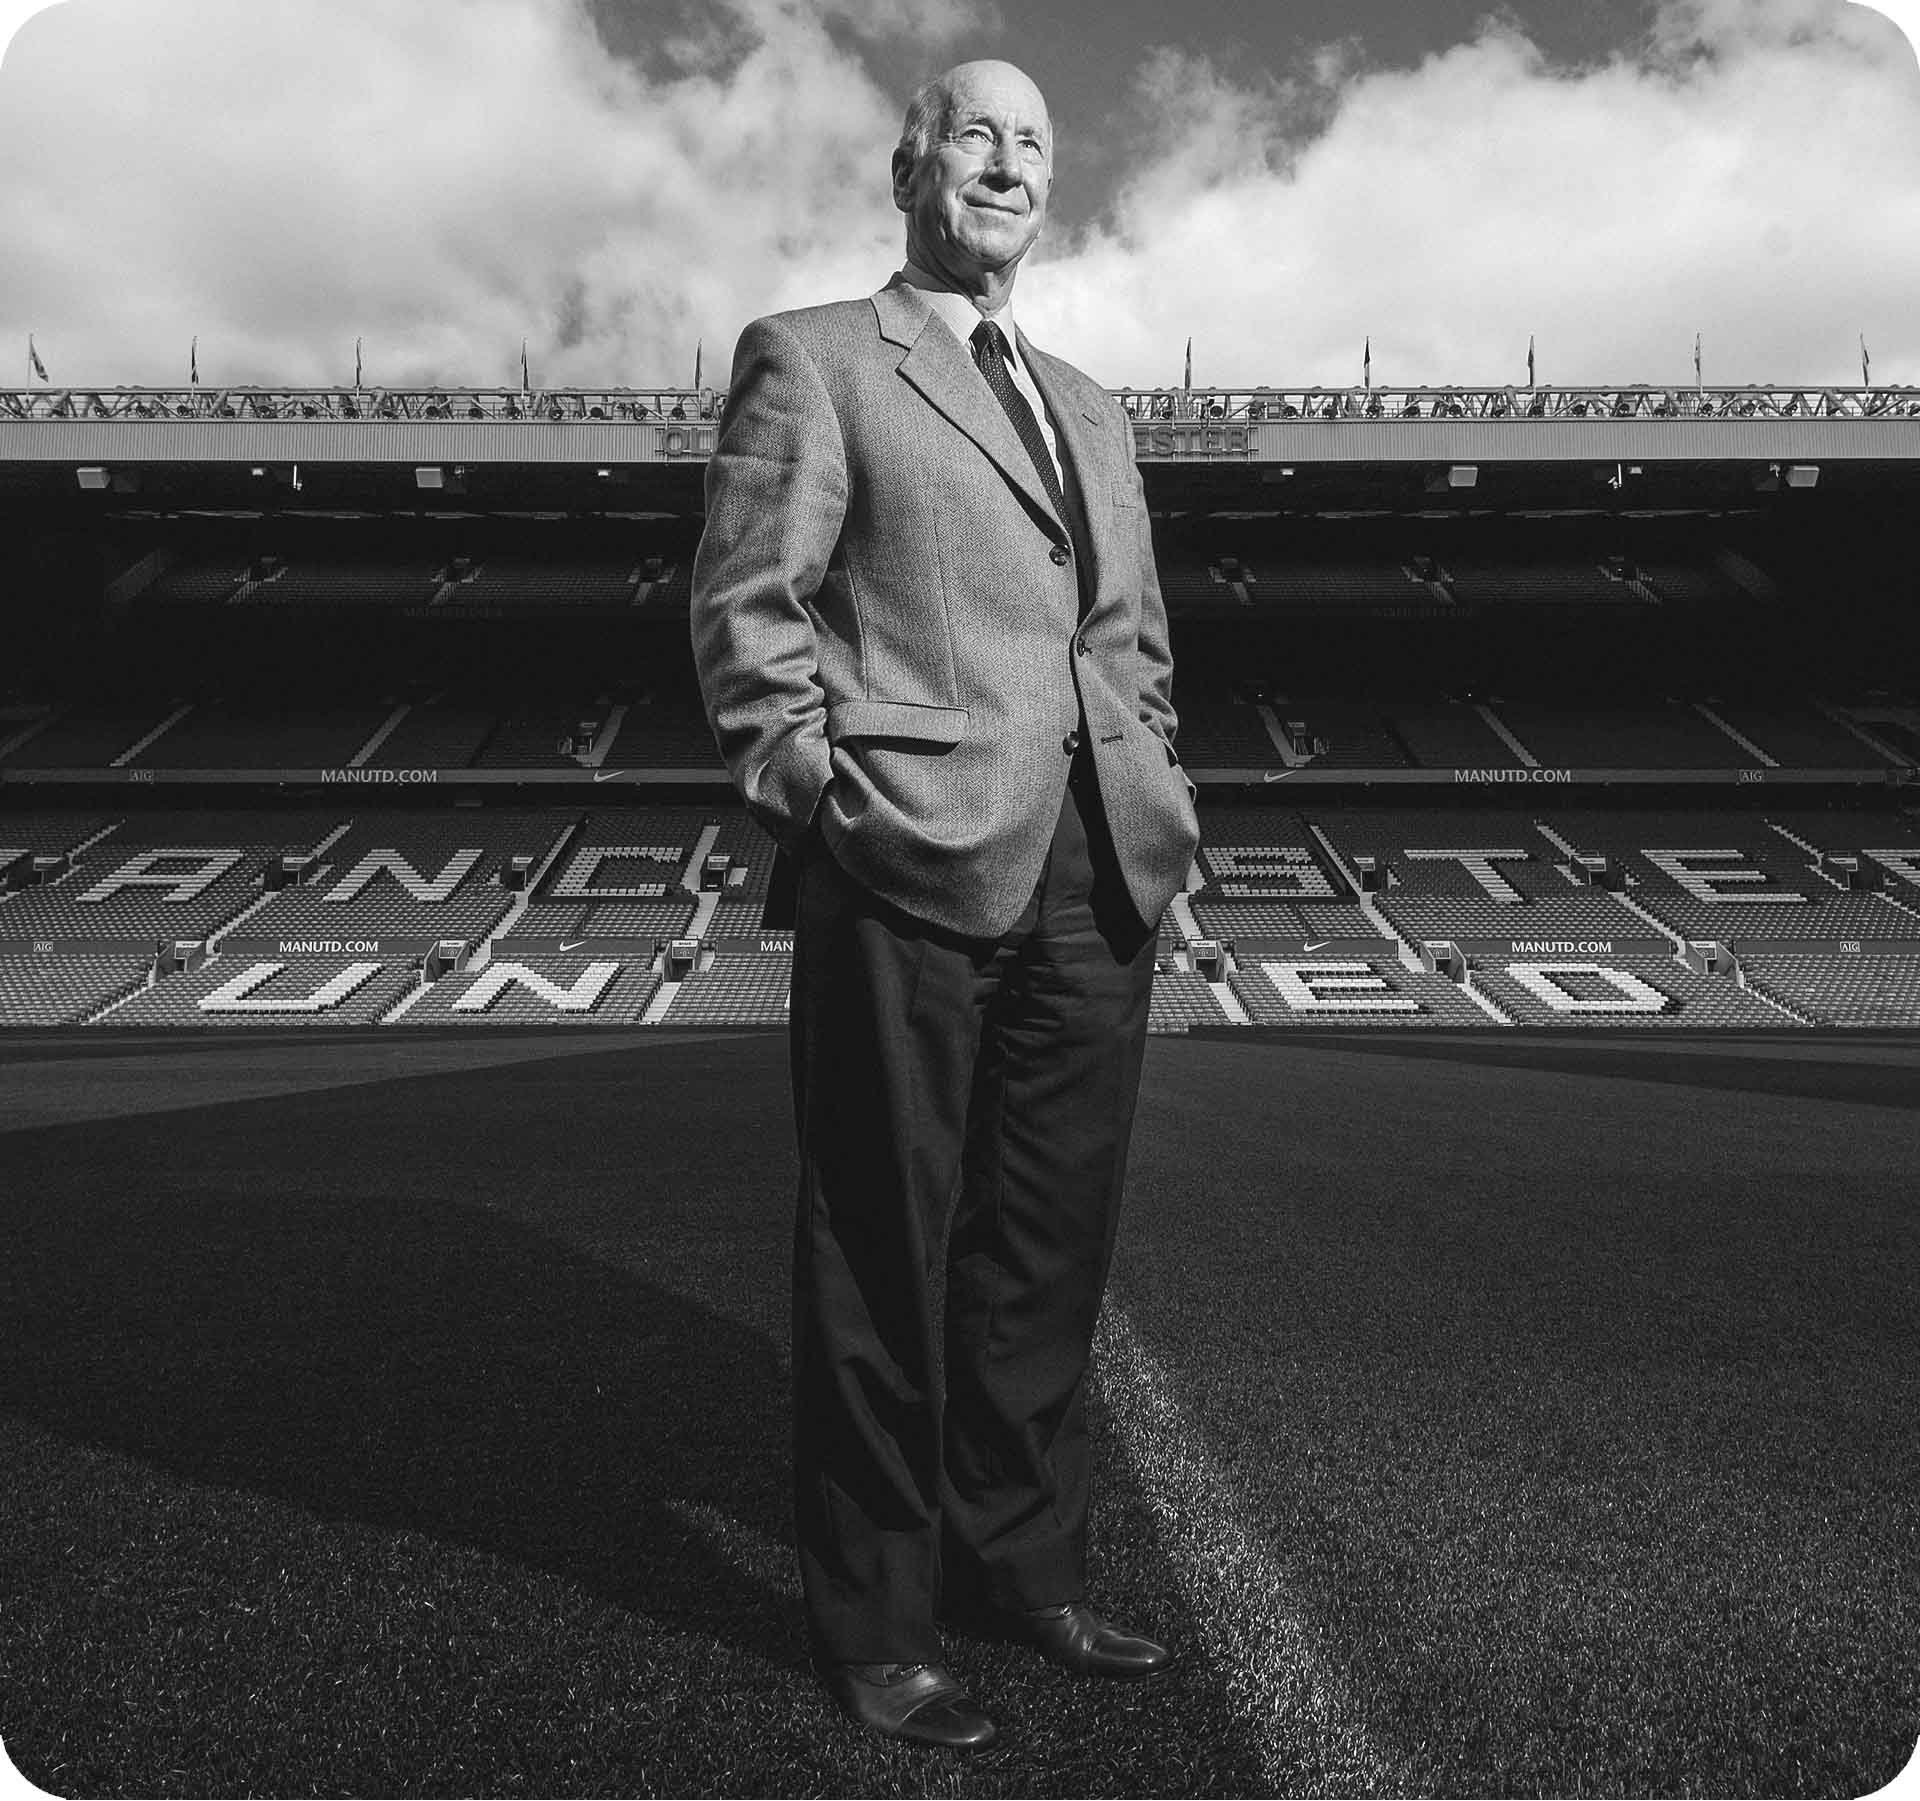 Photograph of Sir Bobby Charlton